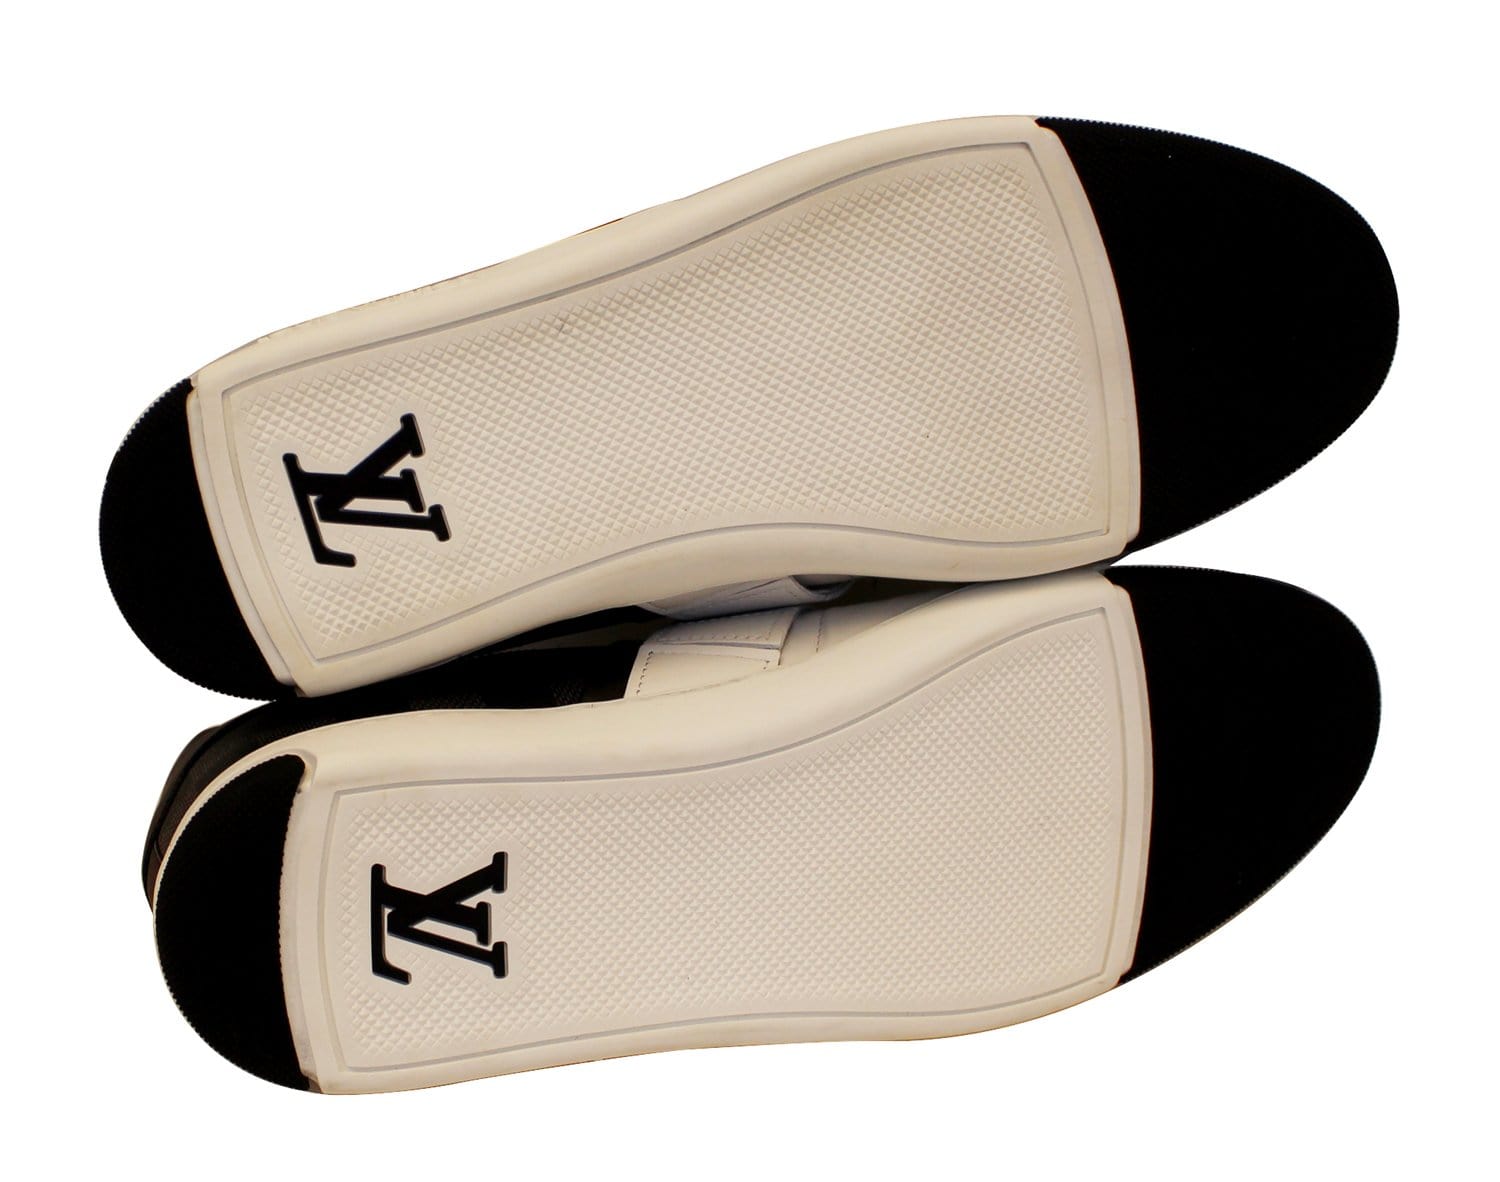 Louis Vuitton Monogram Womens Low-top Sneakers